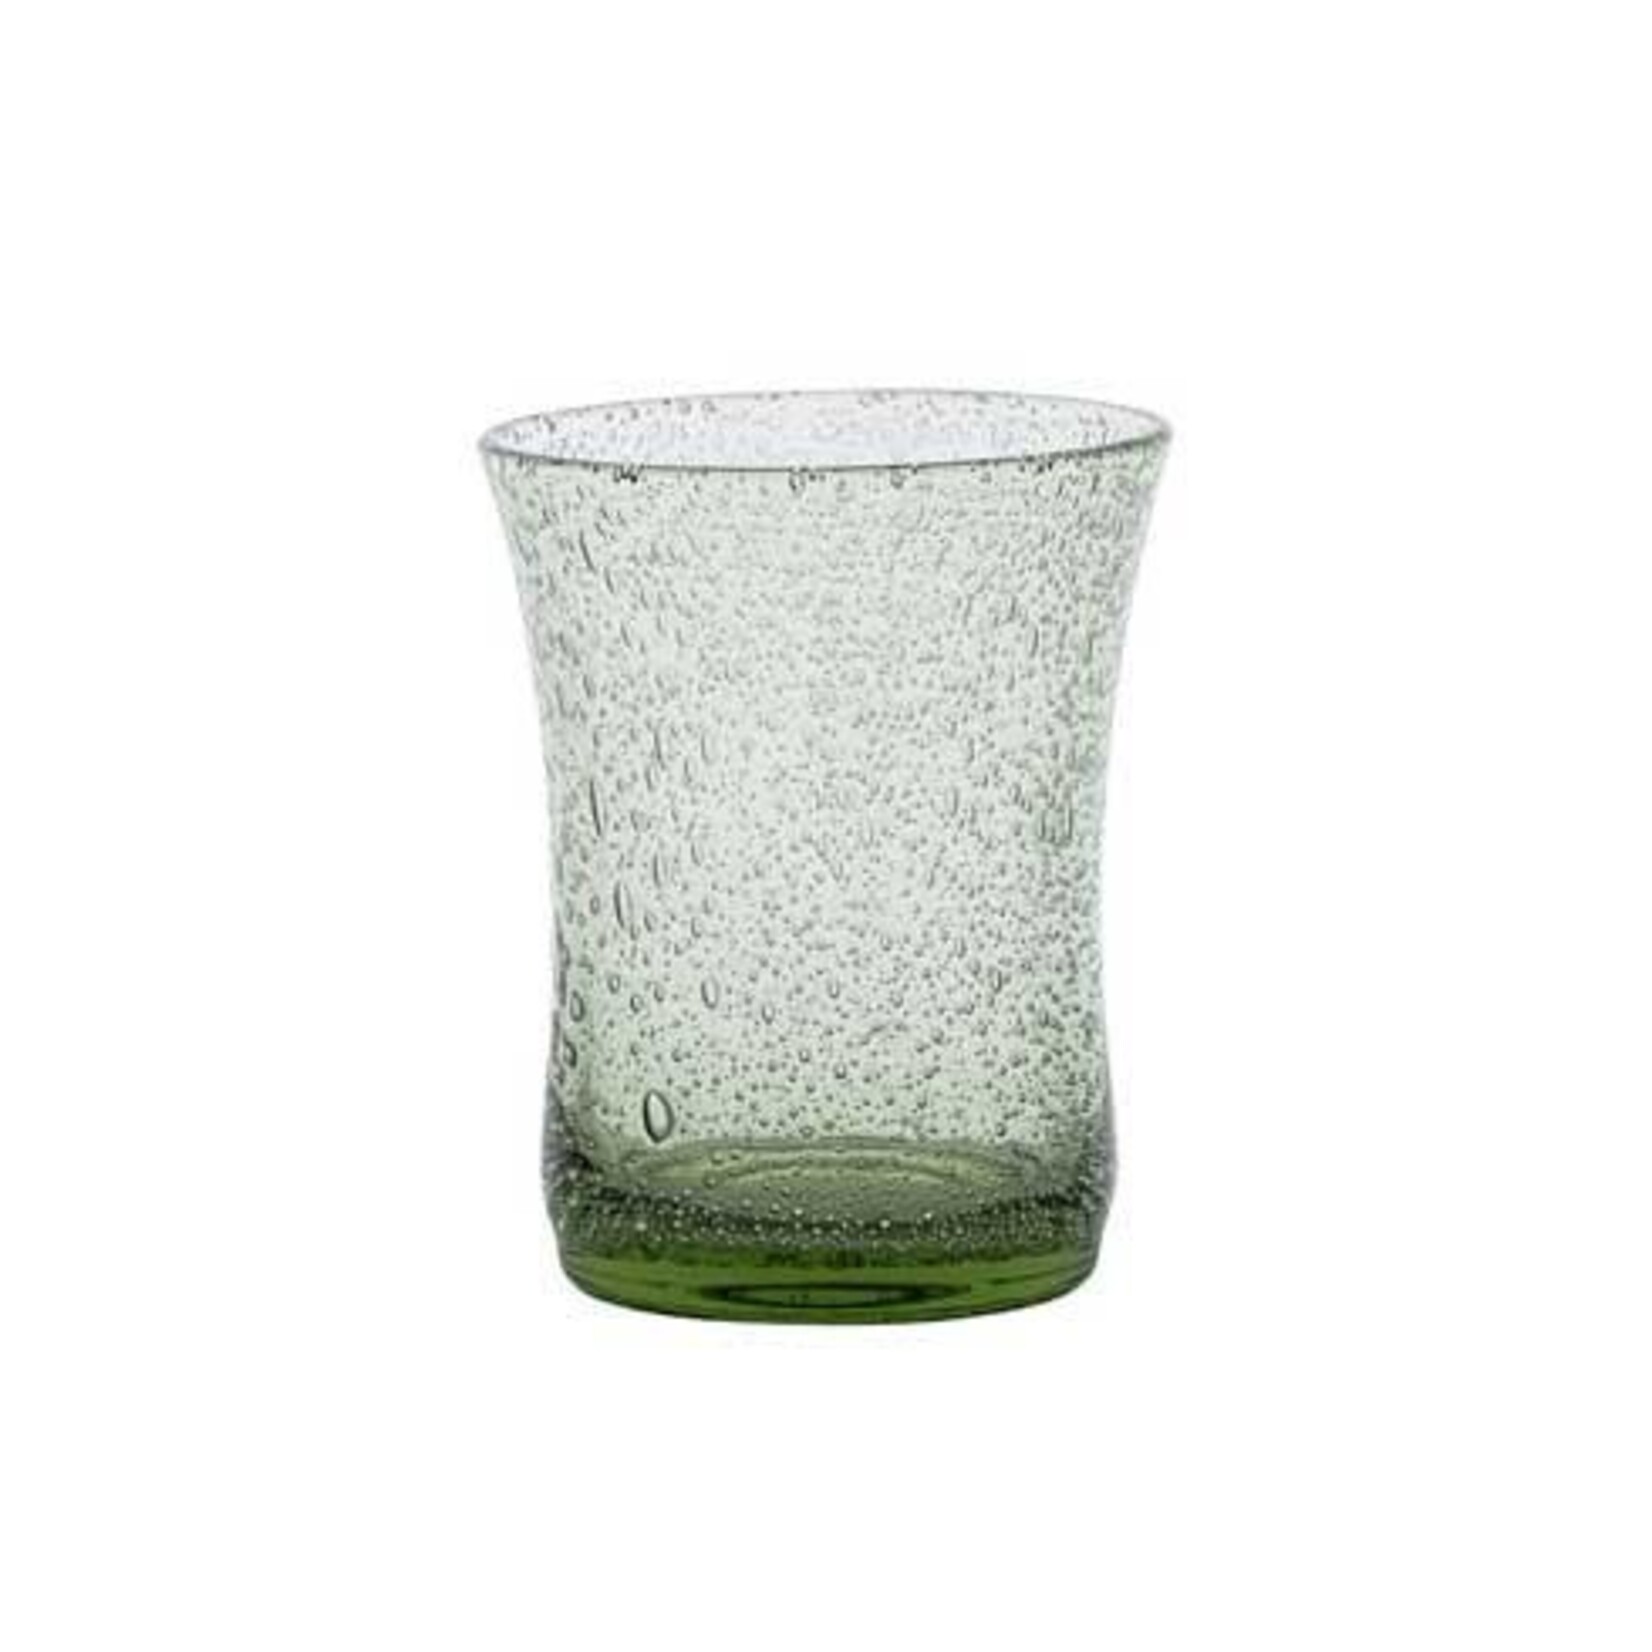 Juliska Provence Glass Small Tumbler - Basil